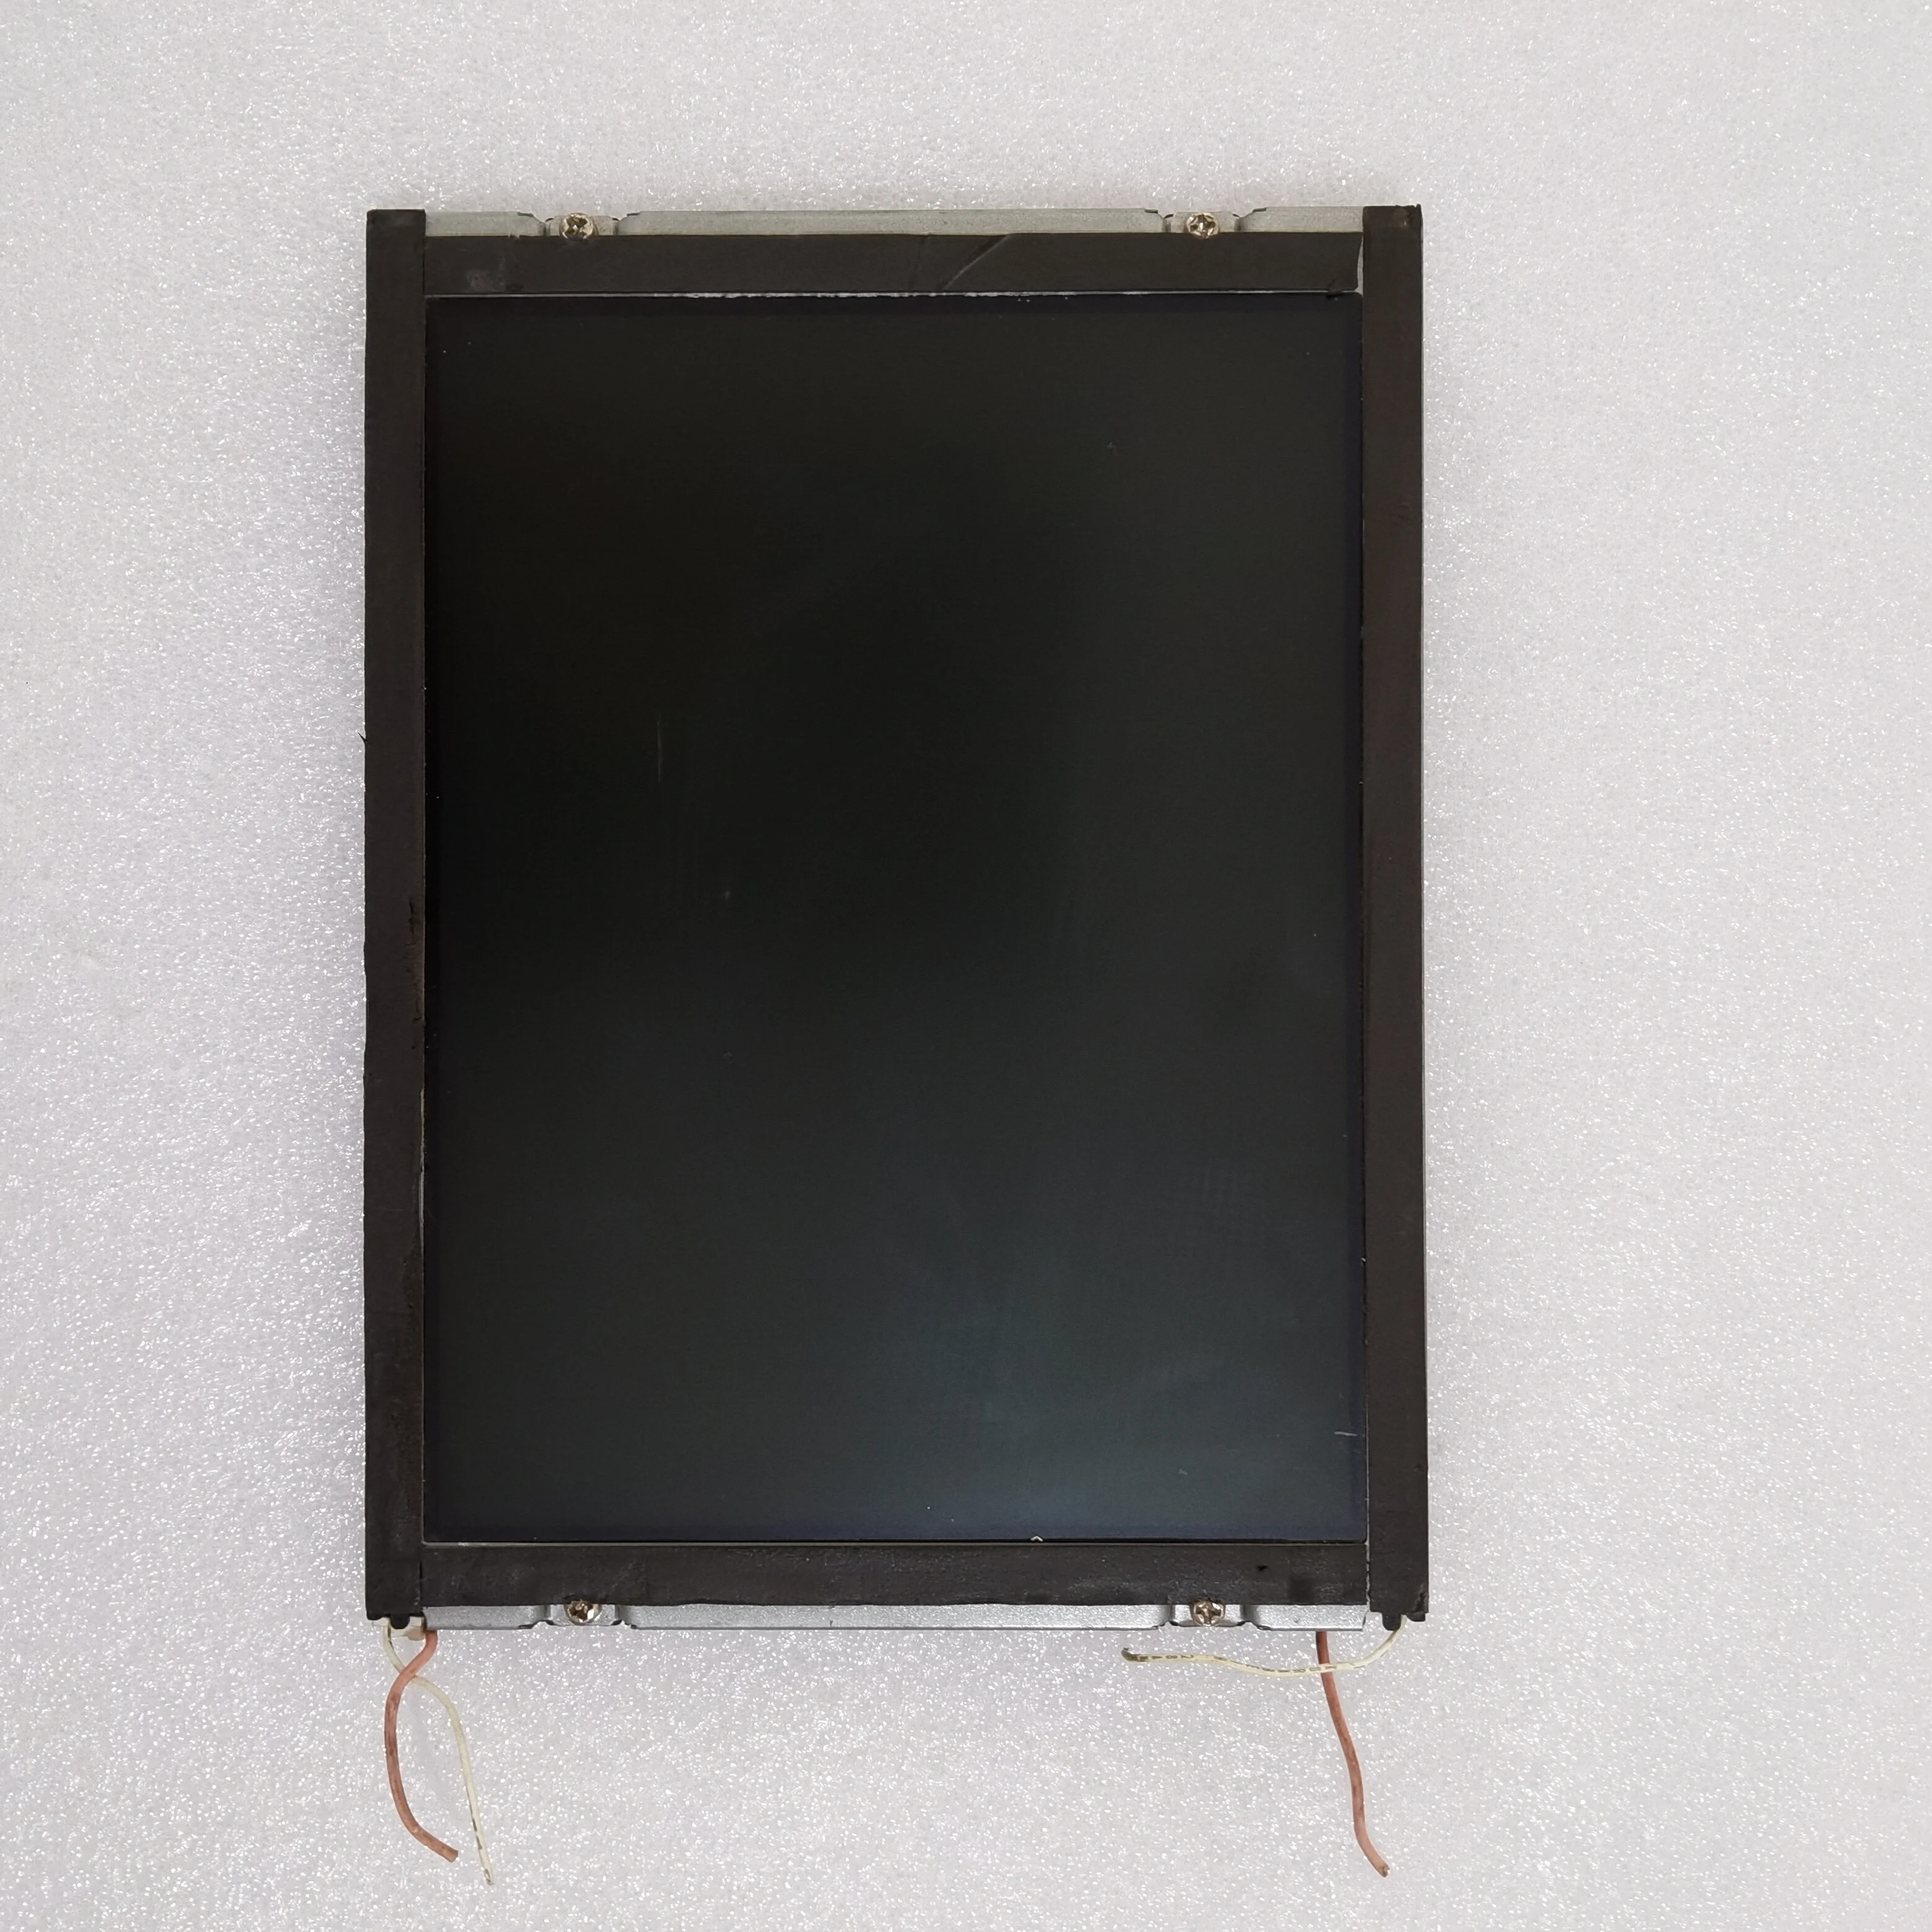 

100% original test LCD SCREEN AA084XAB01 8.4 inch